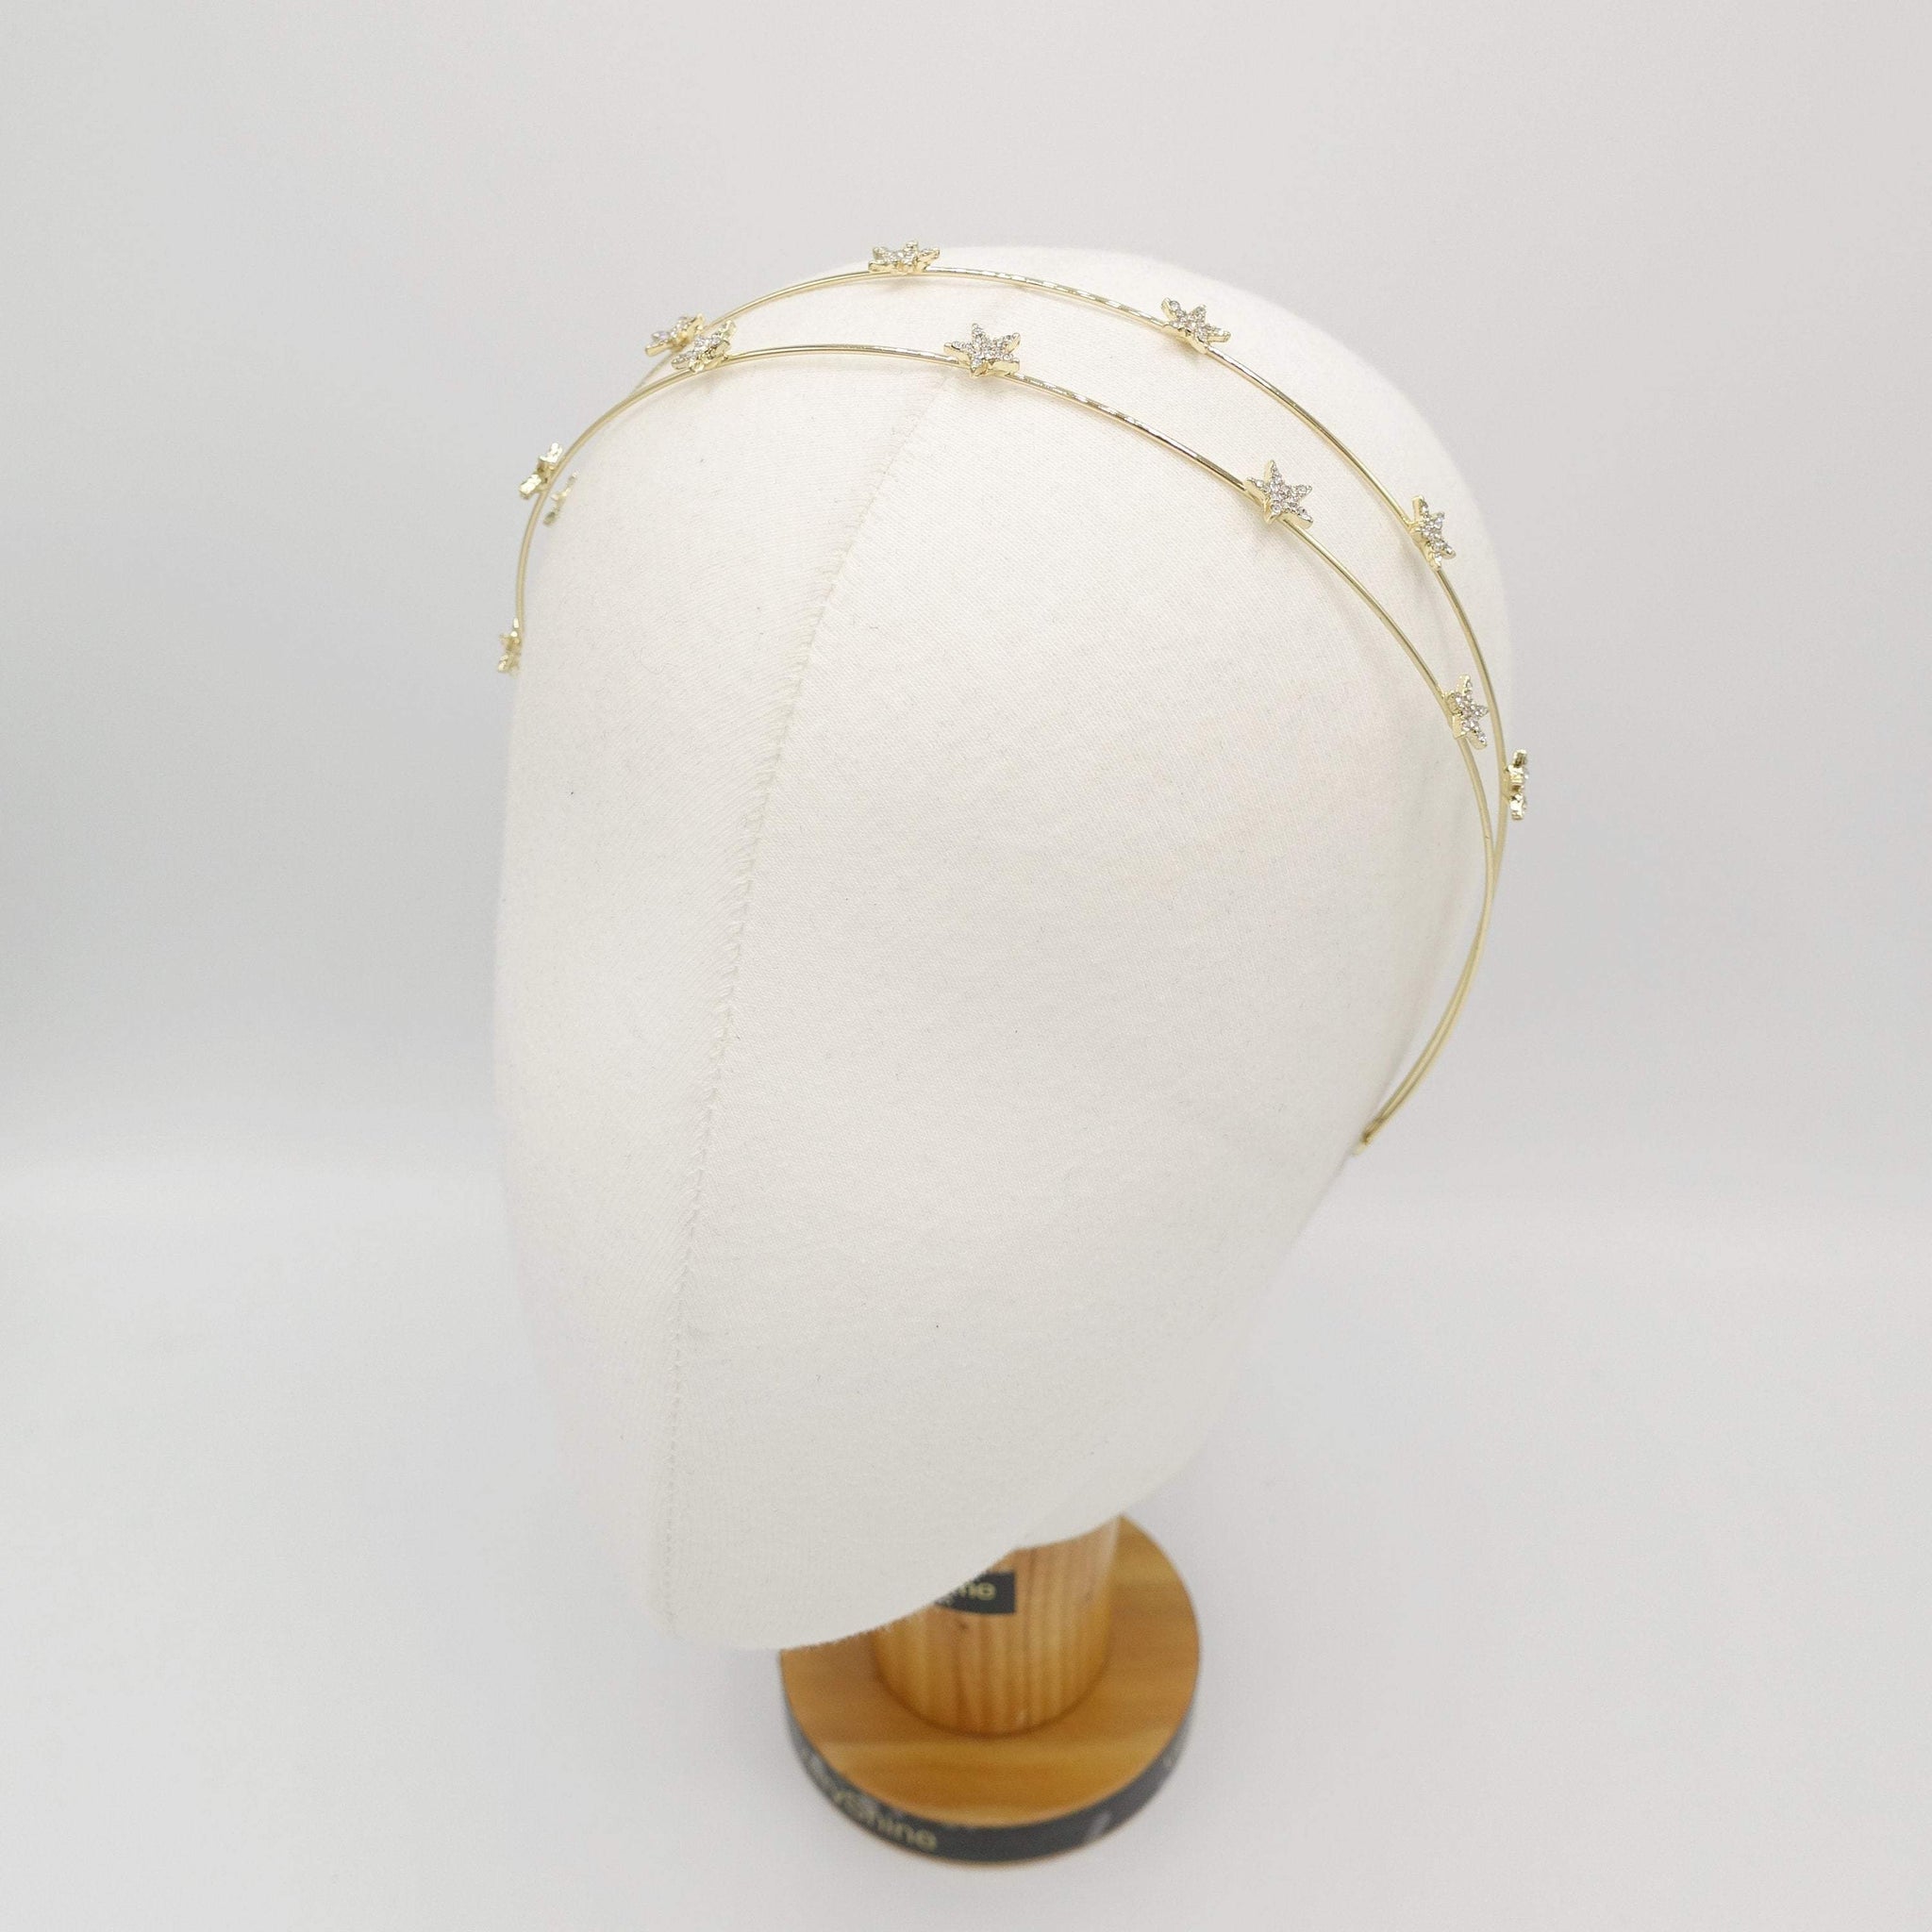 VeryShine Headband double strand star rhinestone headband thin metal headband for women